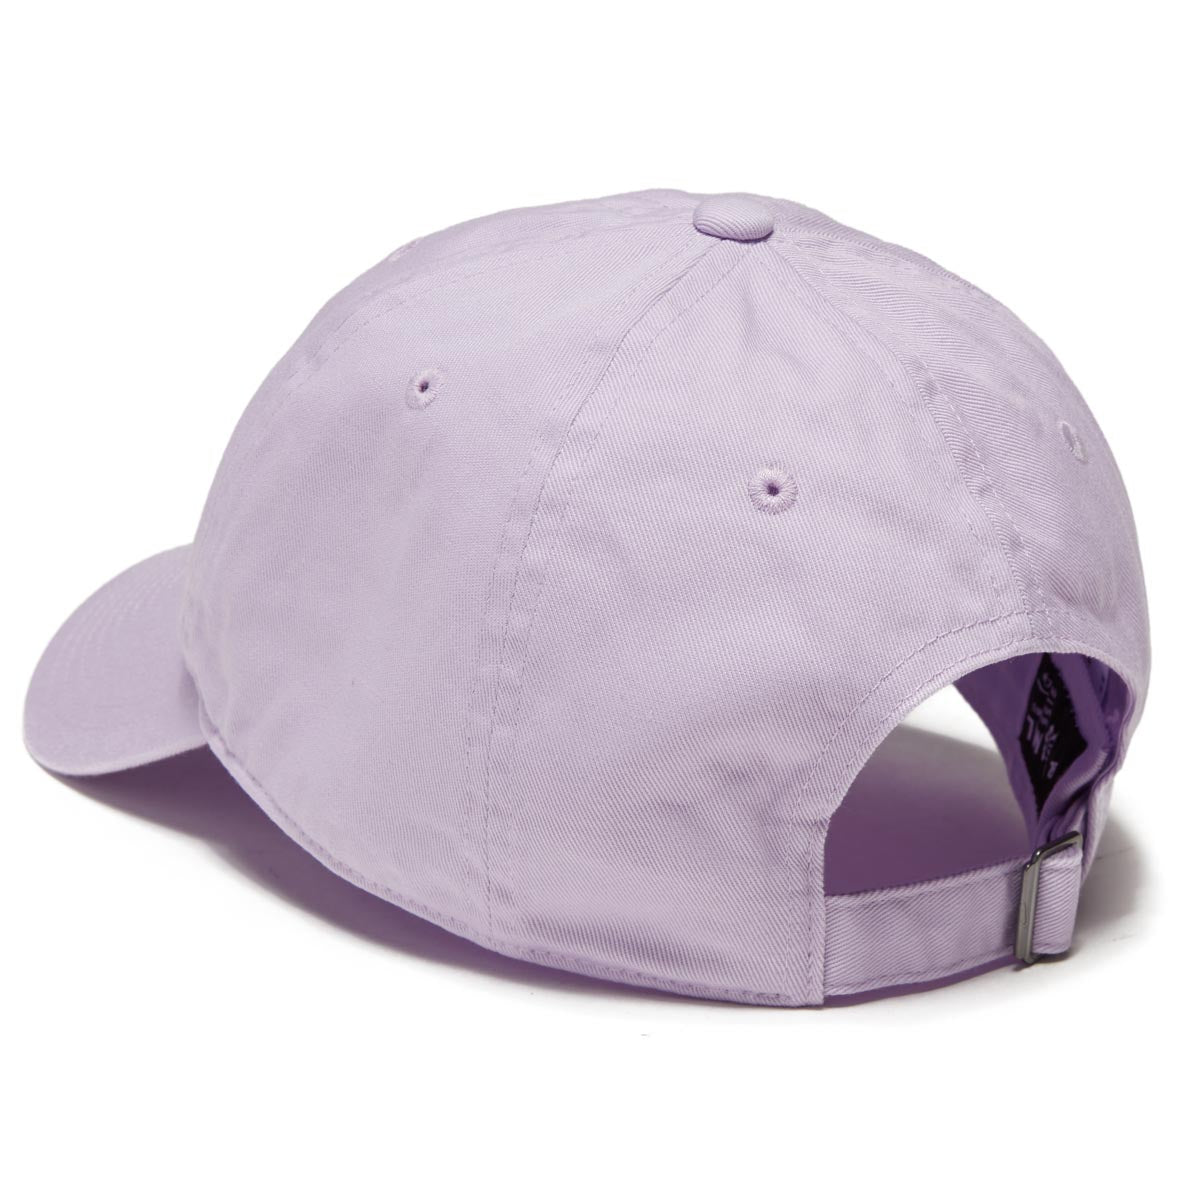 Nike SB Club Hat - Violet Mist/White image 2